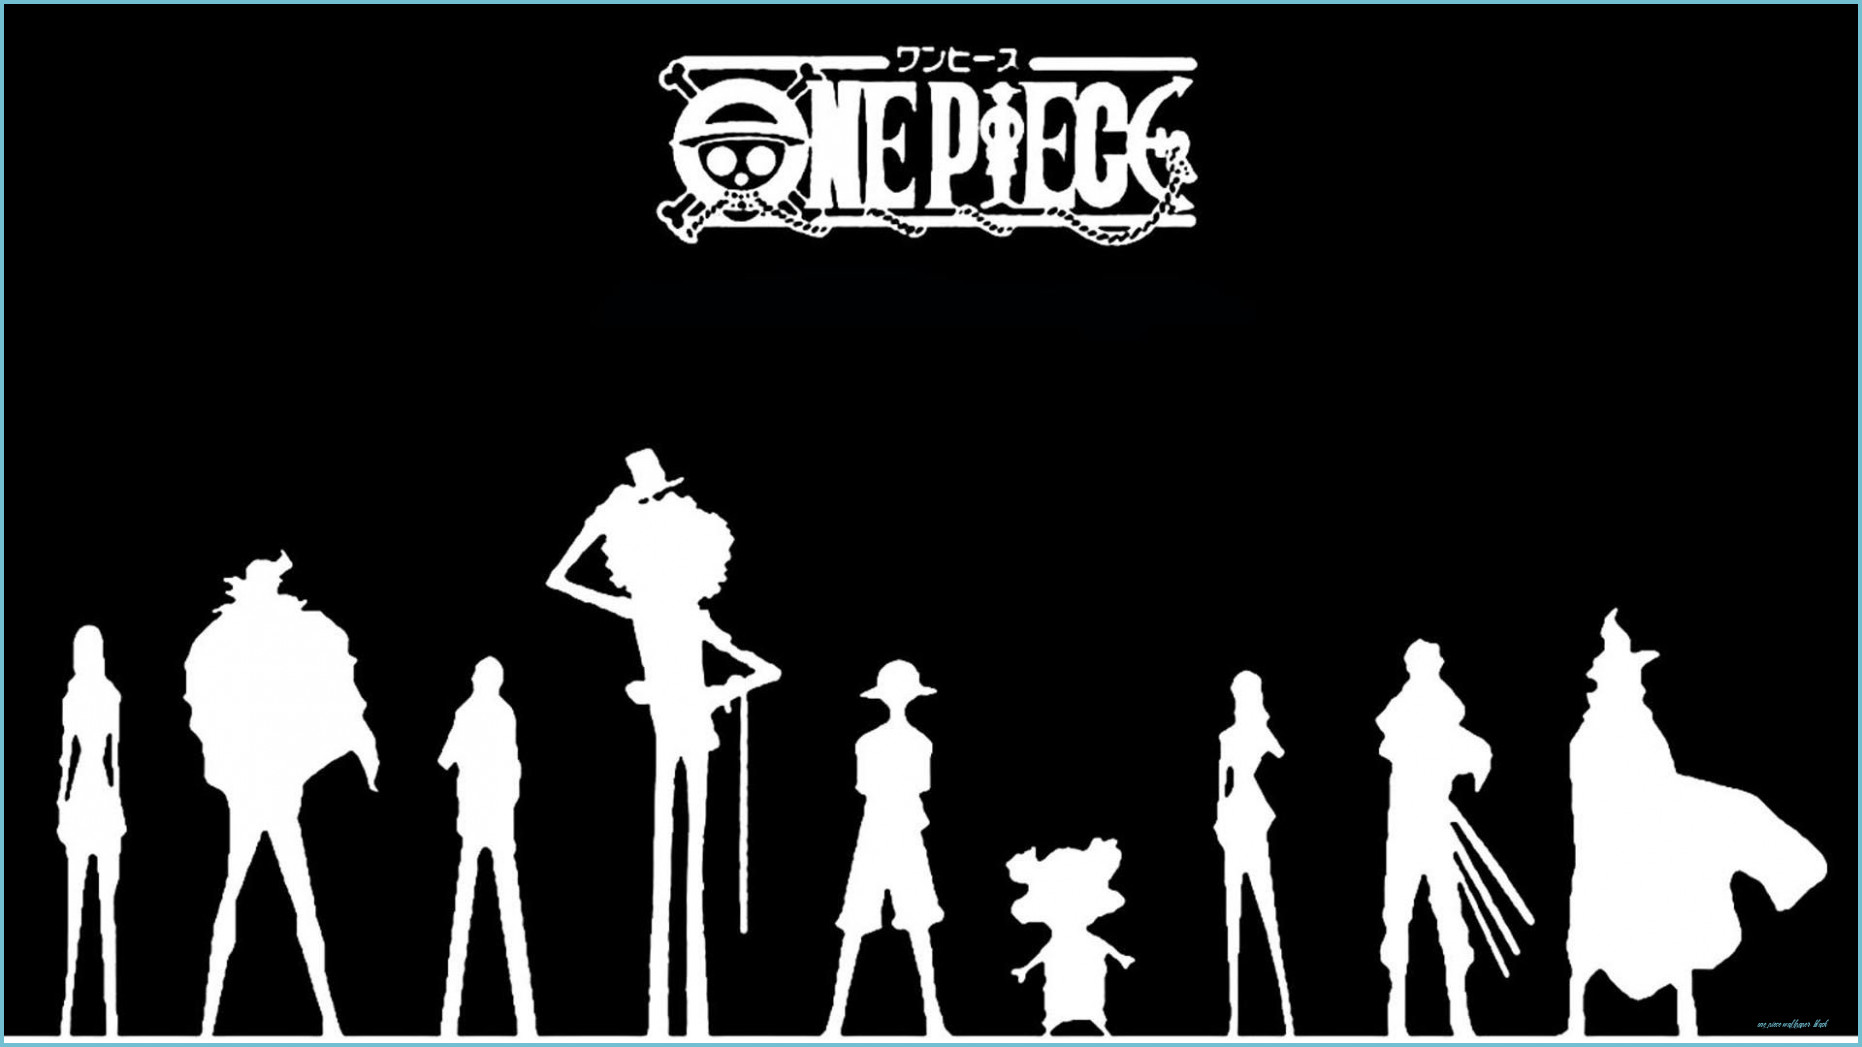 Shadow Anime Japan War One Piece Fighting Action Pirates Adventure Piece Wallpaper Black